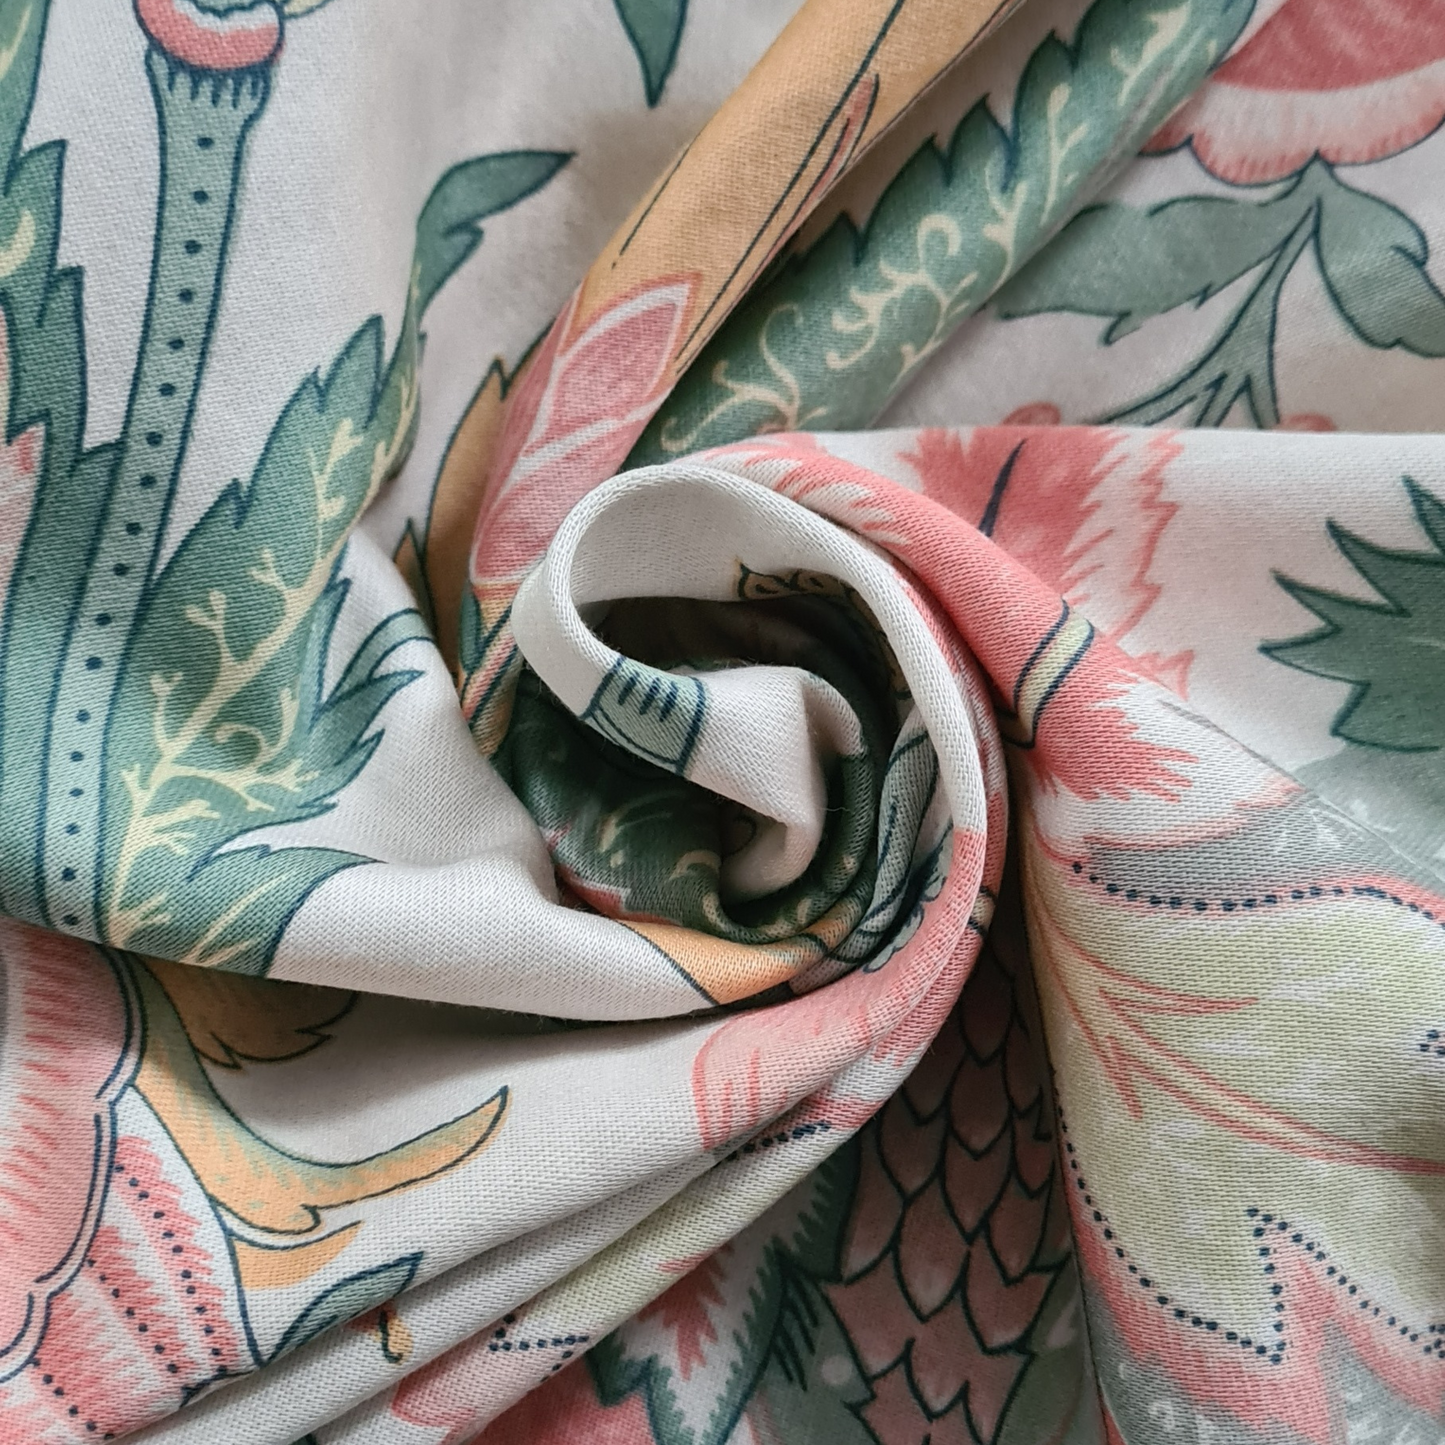 Tissu polyester - Écru  avec fleurs roses et feuillage vert - 275 cm * 135 cm